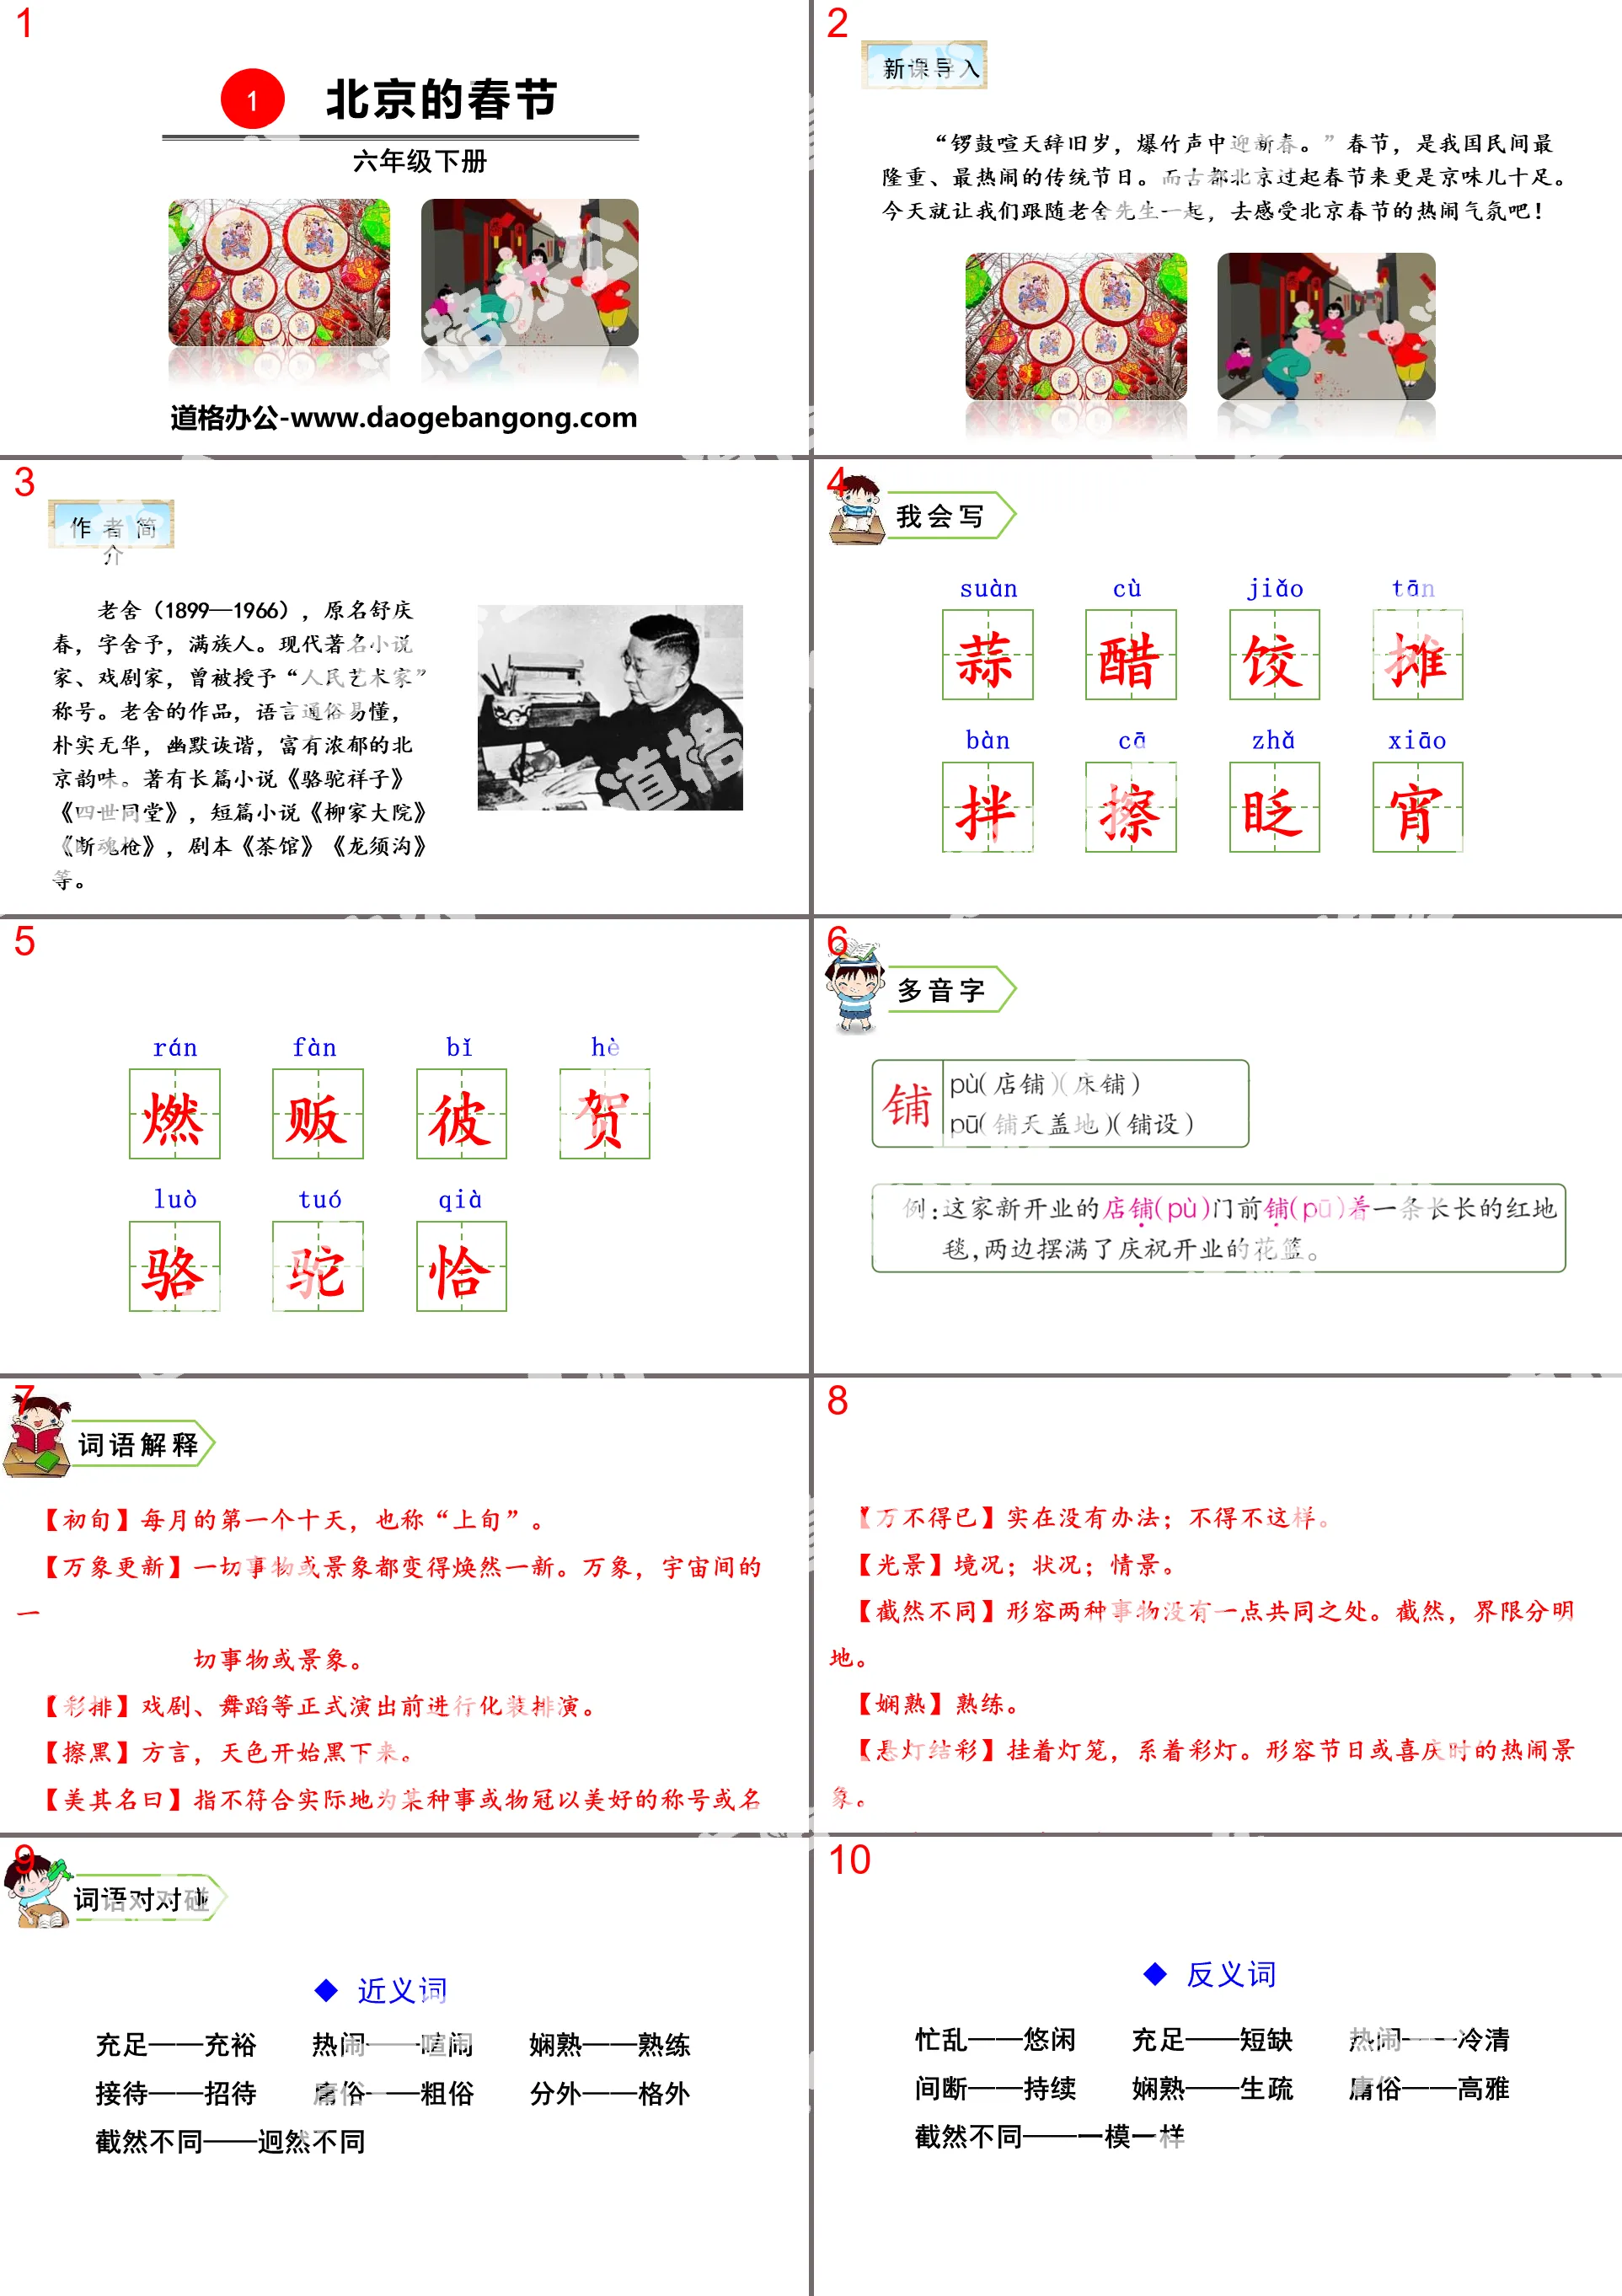 "Spring Festival in Beijing" PPT courseware download